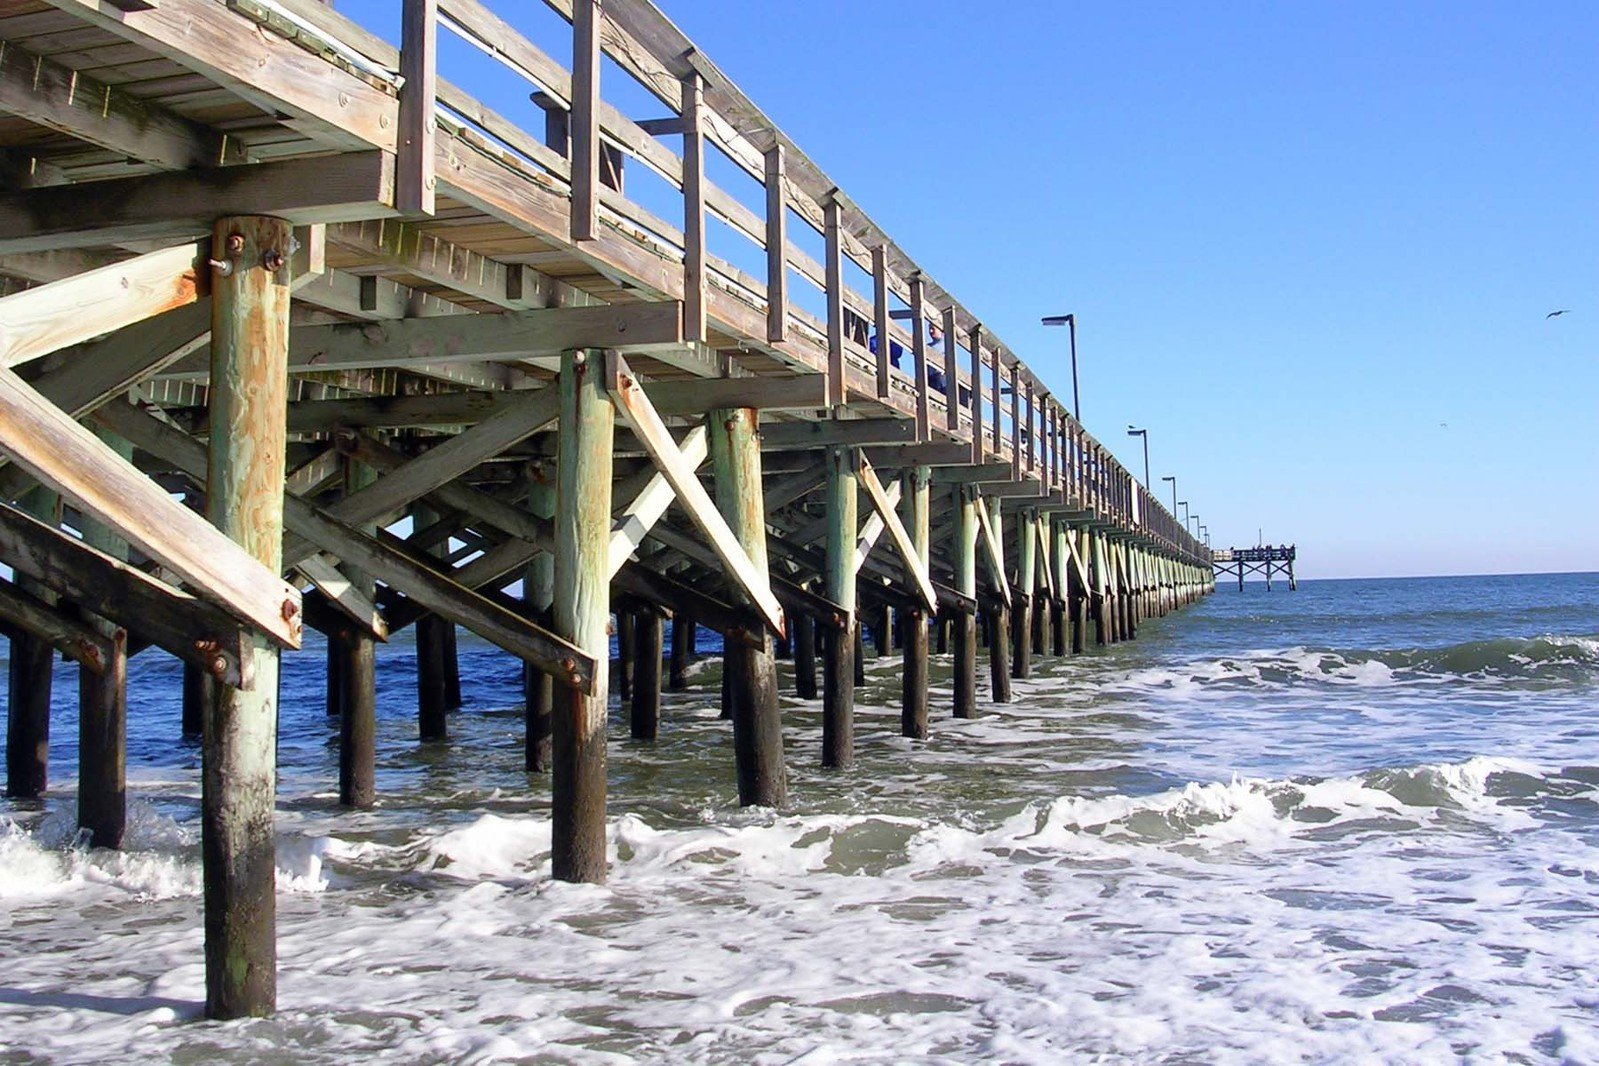 a long pier on the edge of the ocean